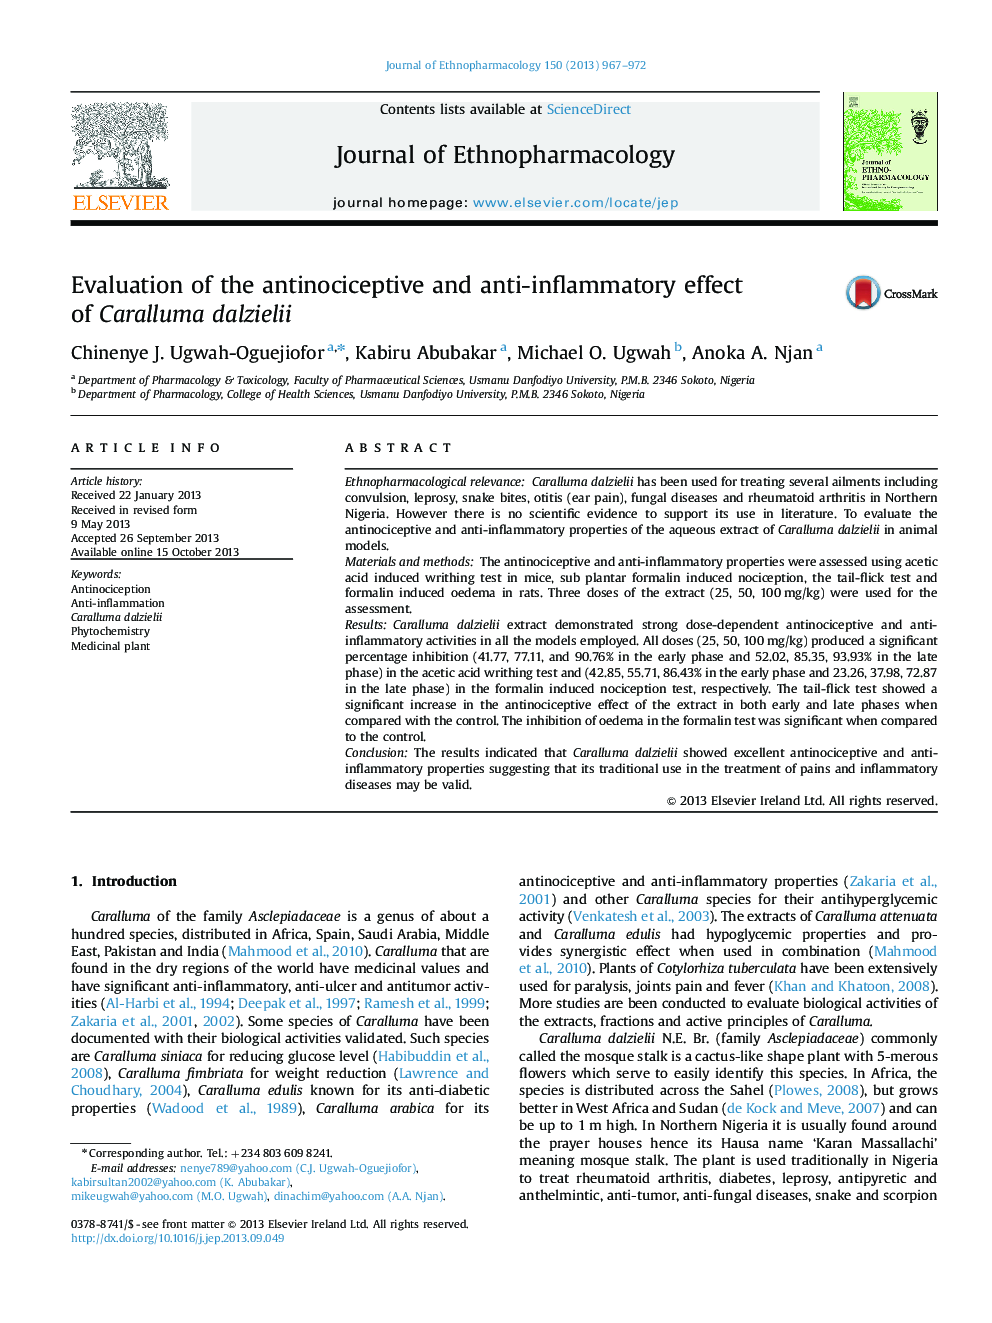 Evaluation of the antinociceptive and anti-inflammatory effect of Caralluma dalzielii